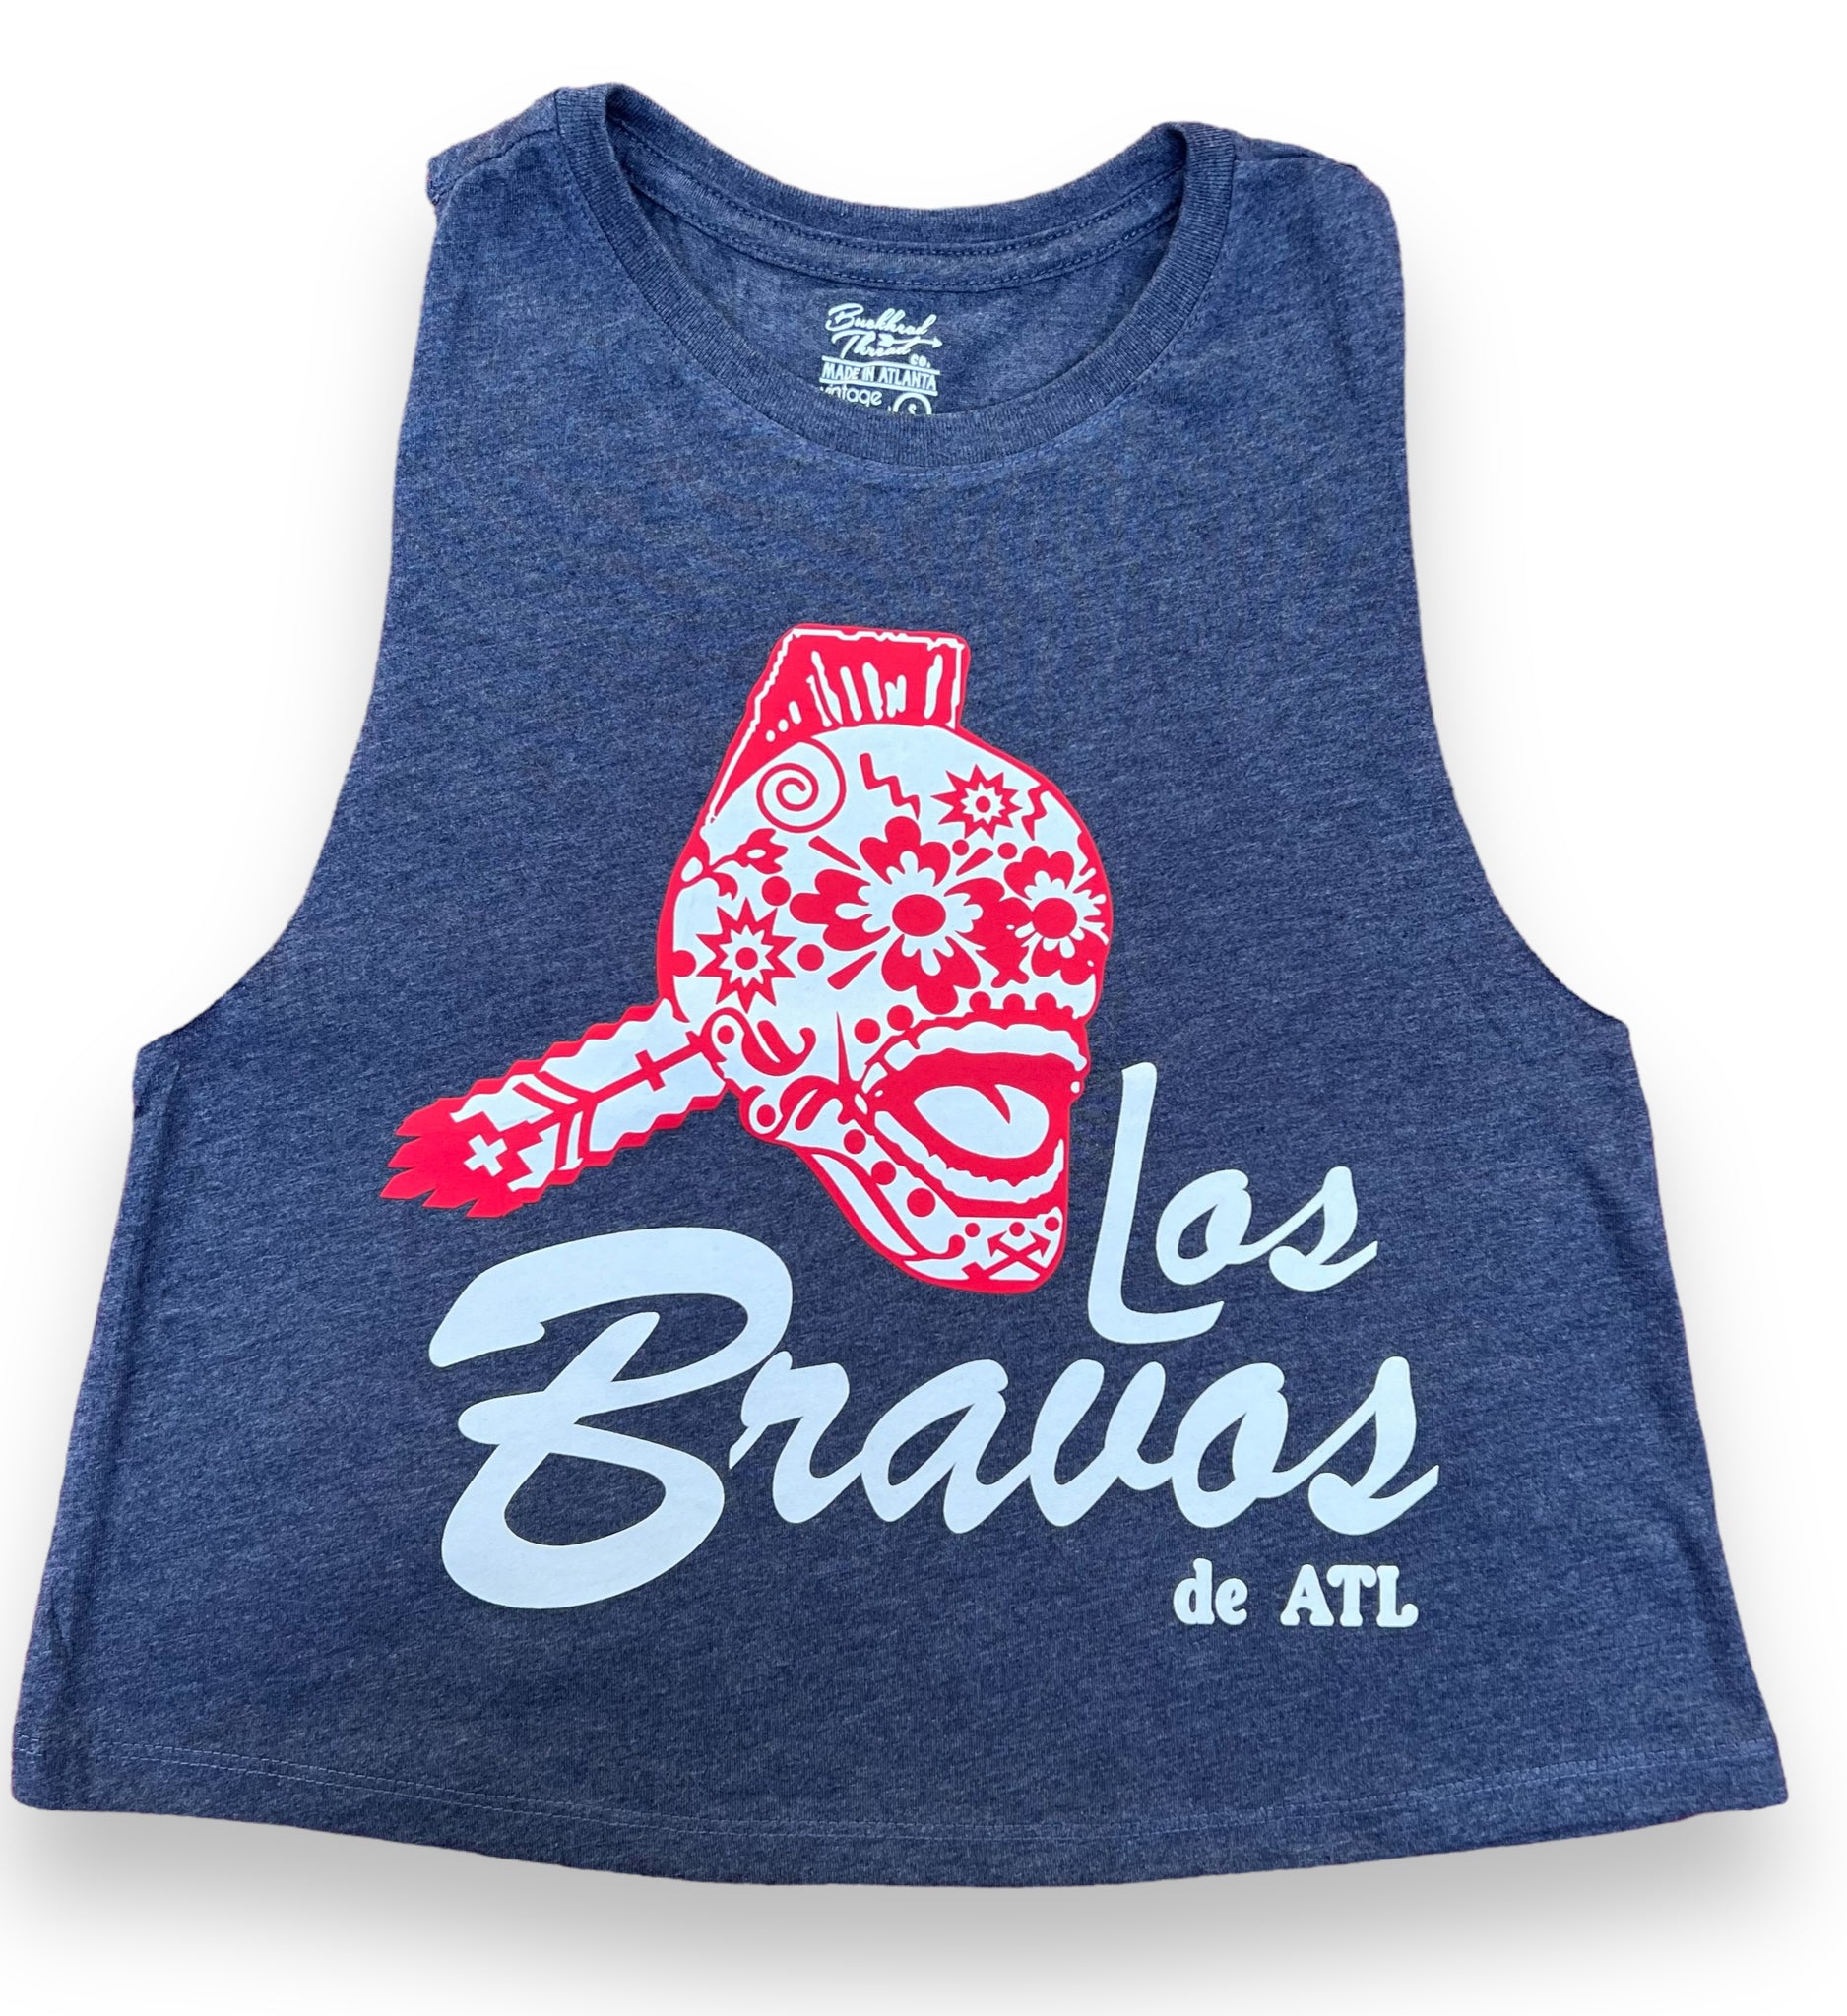 Los Bravos de ATL Atlanta Braves shirt, hoodie, sweatshirt and tank top